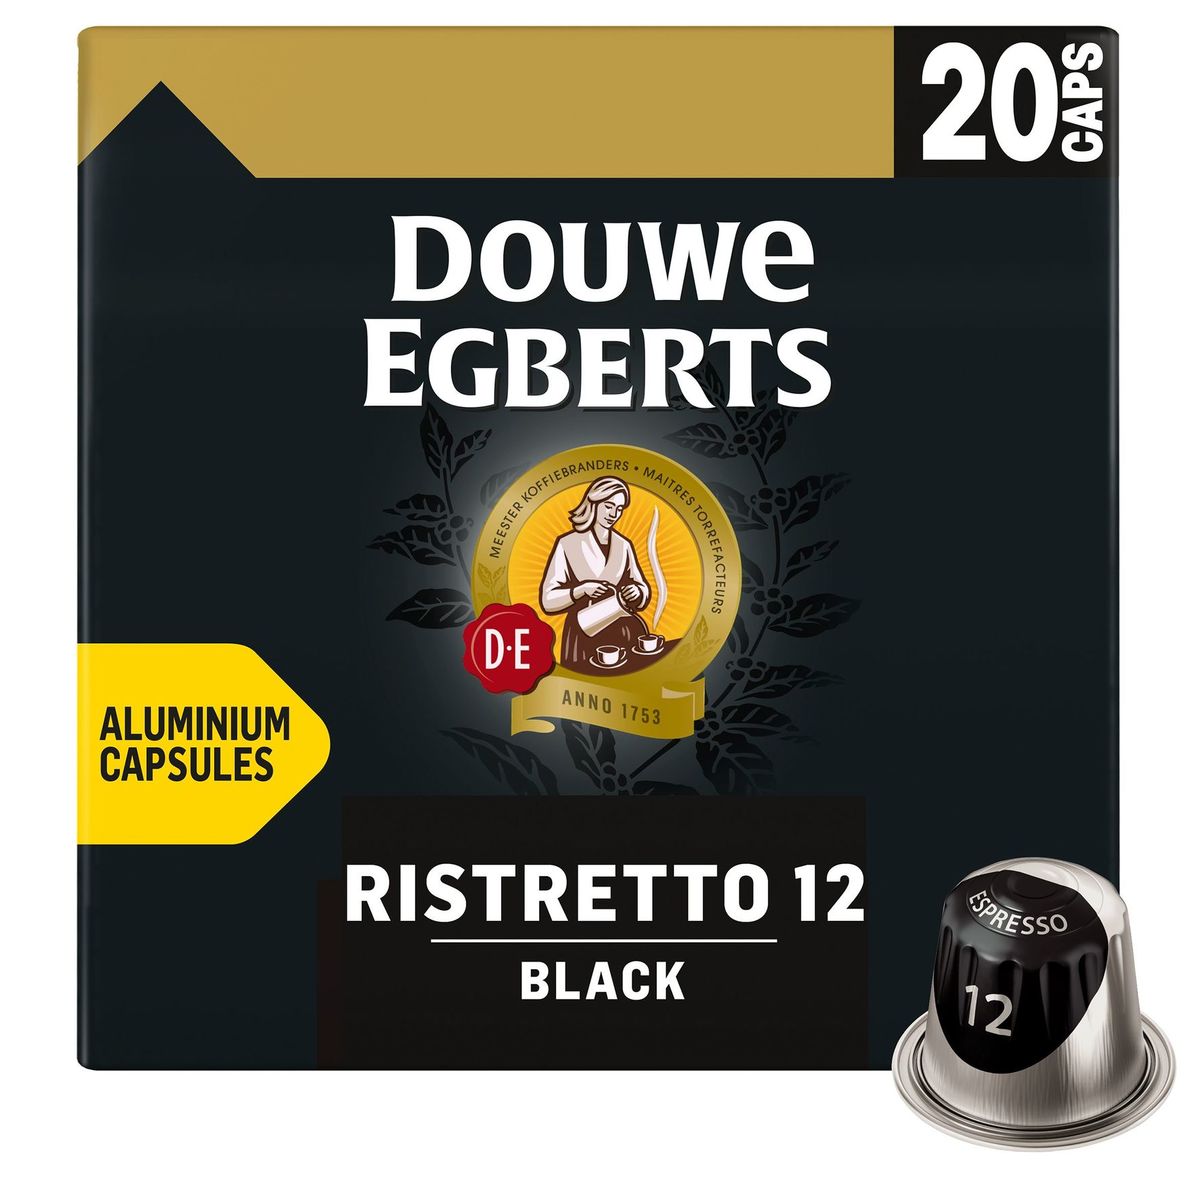 DOUWE EGBERTS Koffie Capsules Black Ristretto Intensiteit 12 20 stuks